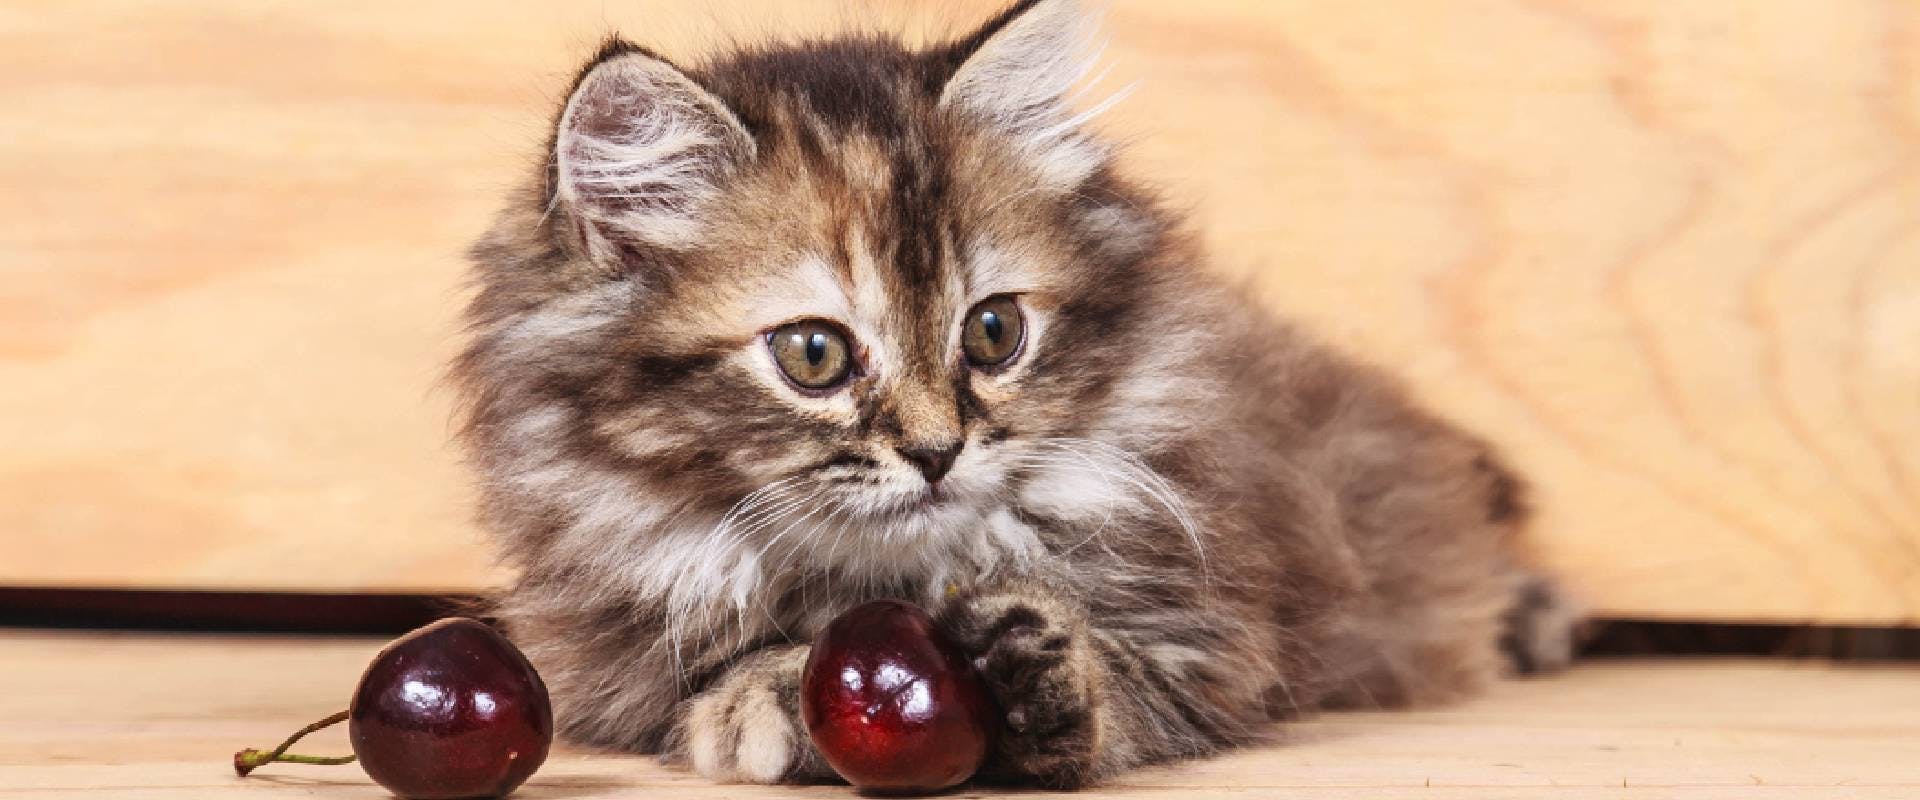 Kitten playing with cherries